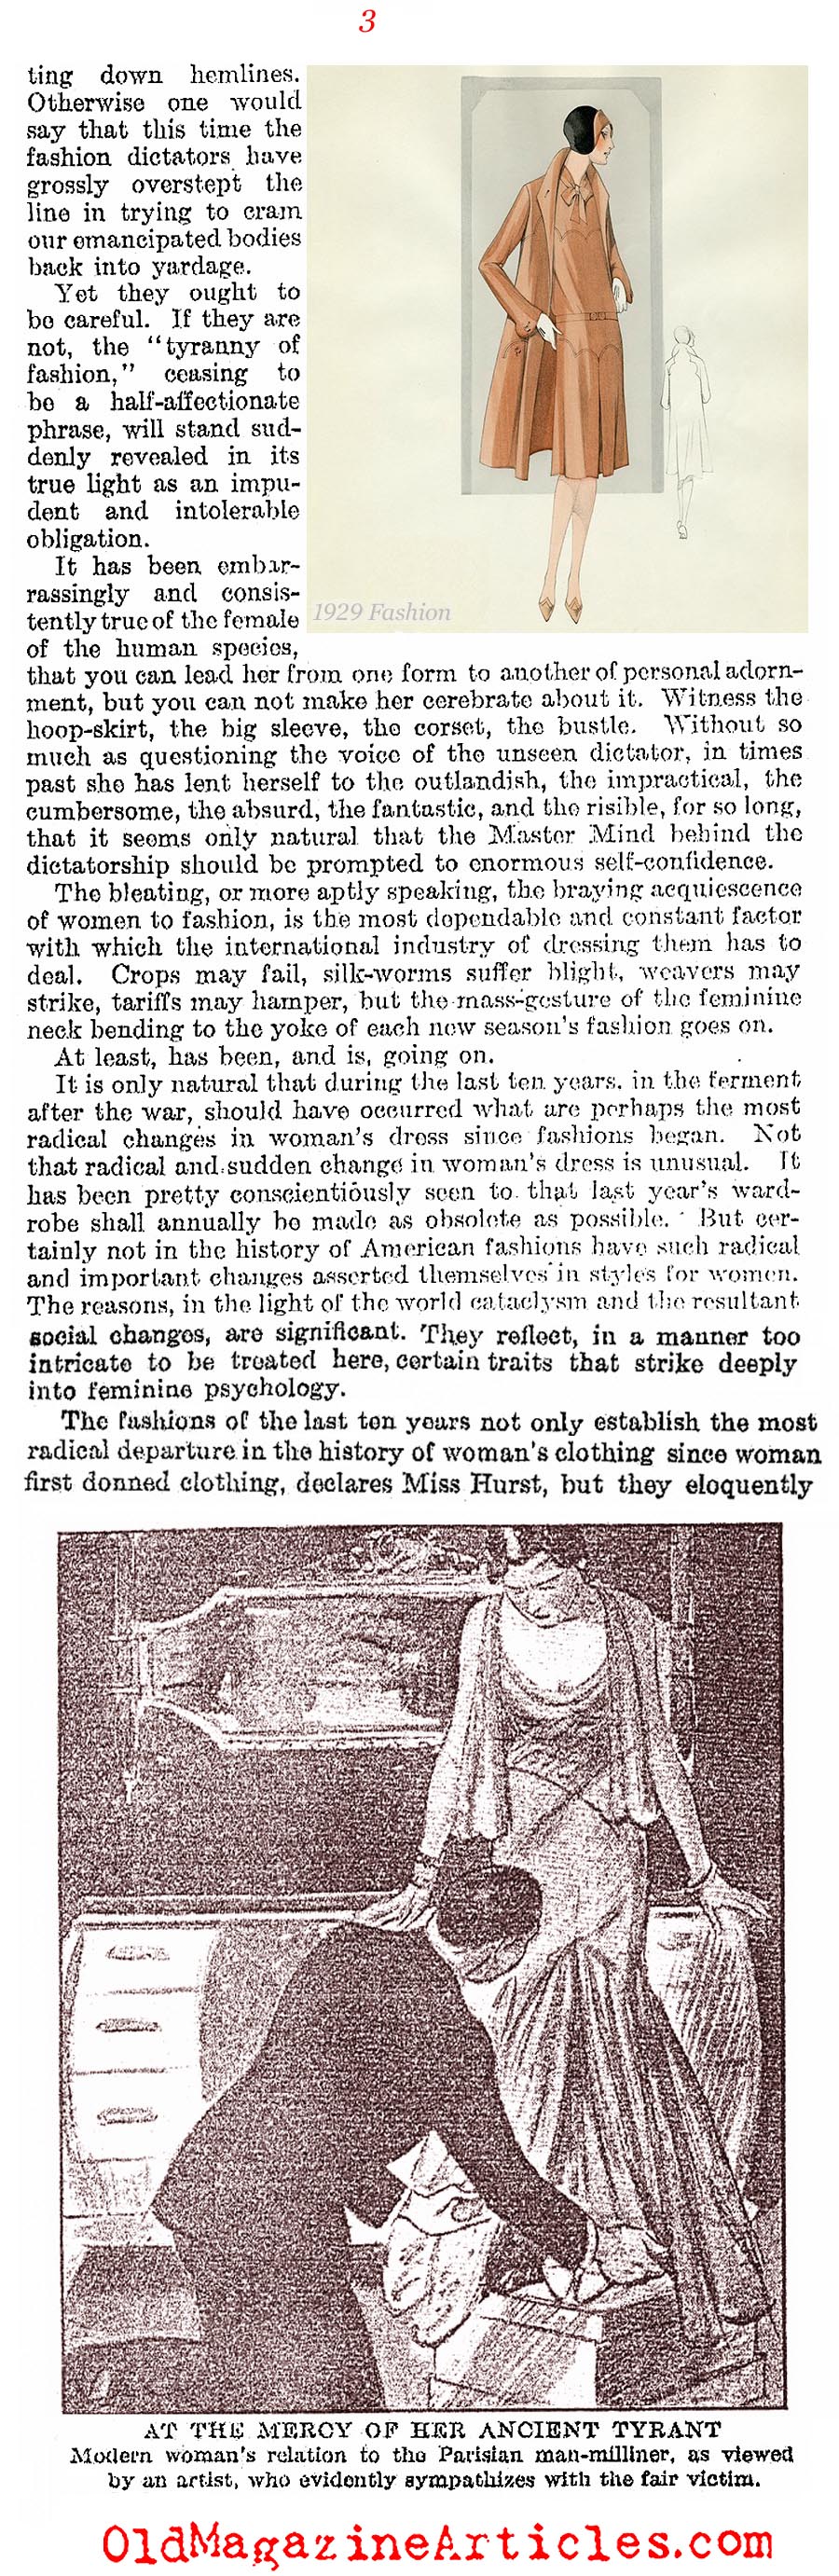 Turning Back The Fashion Revolution (Literary Digest, 1929)